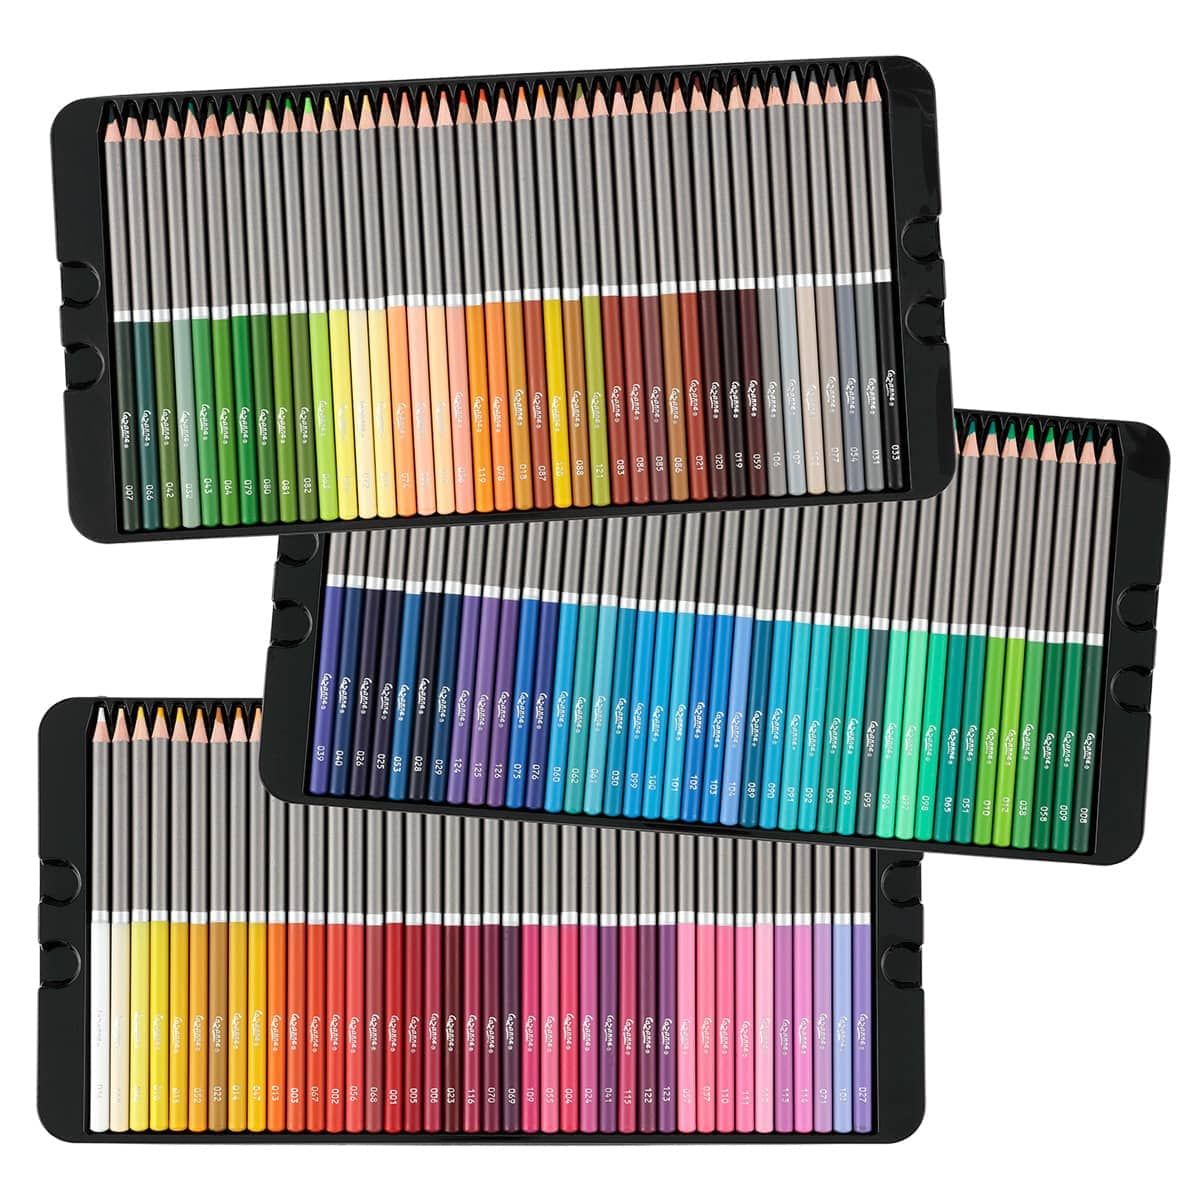 https://www.jerrysartarama.com/media/catalog/product/cache/ecb49a32eeb5603594b082bd5fe65733/c/e/cezanne-colored-pencils-120-set-tray-composite-min.jpg